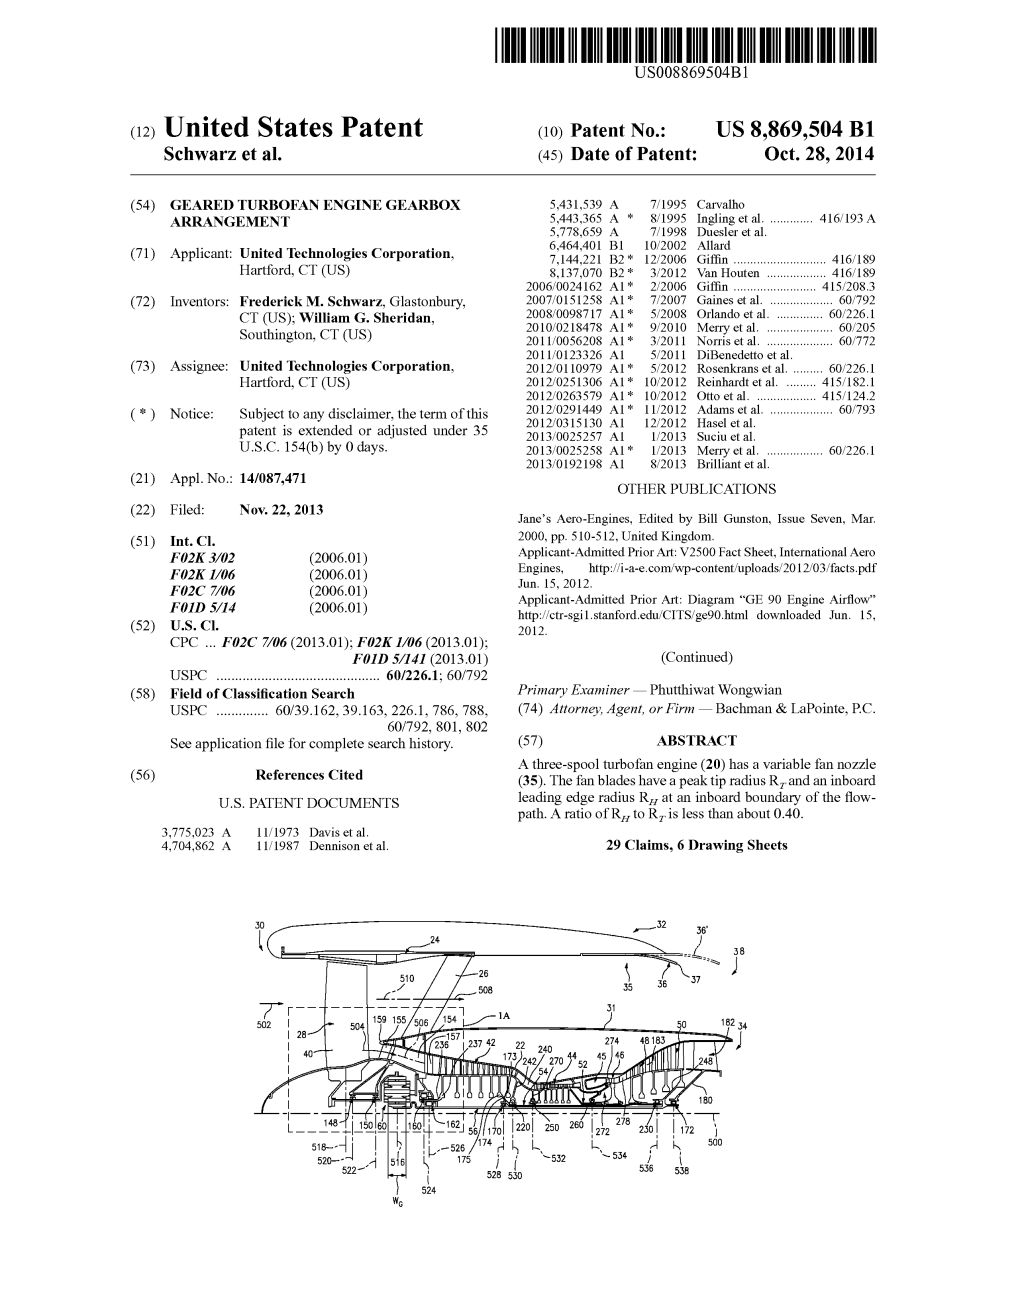 (12) United States Patent (10) Patent No.: US 8,869,504 B1 Schwarz Et Al